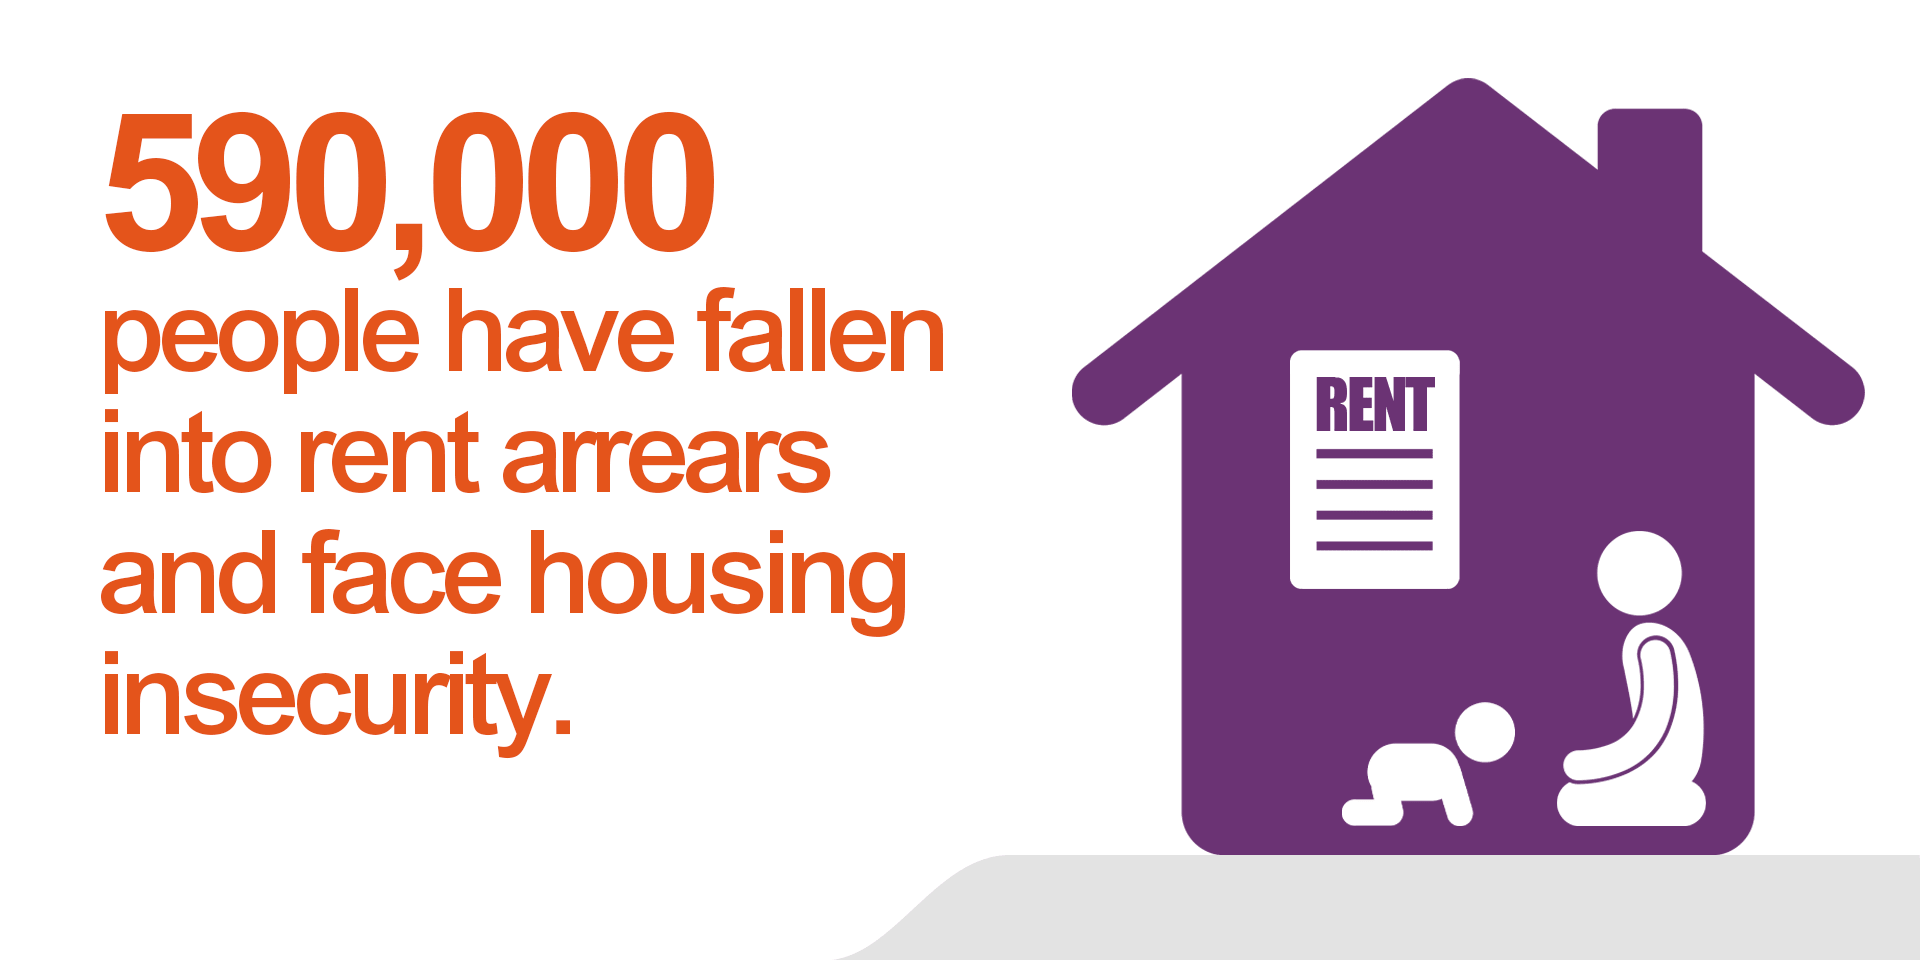 590,000 people have fallen into rent arrears